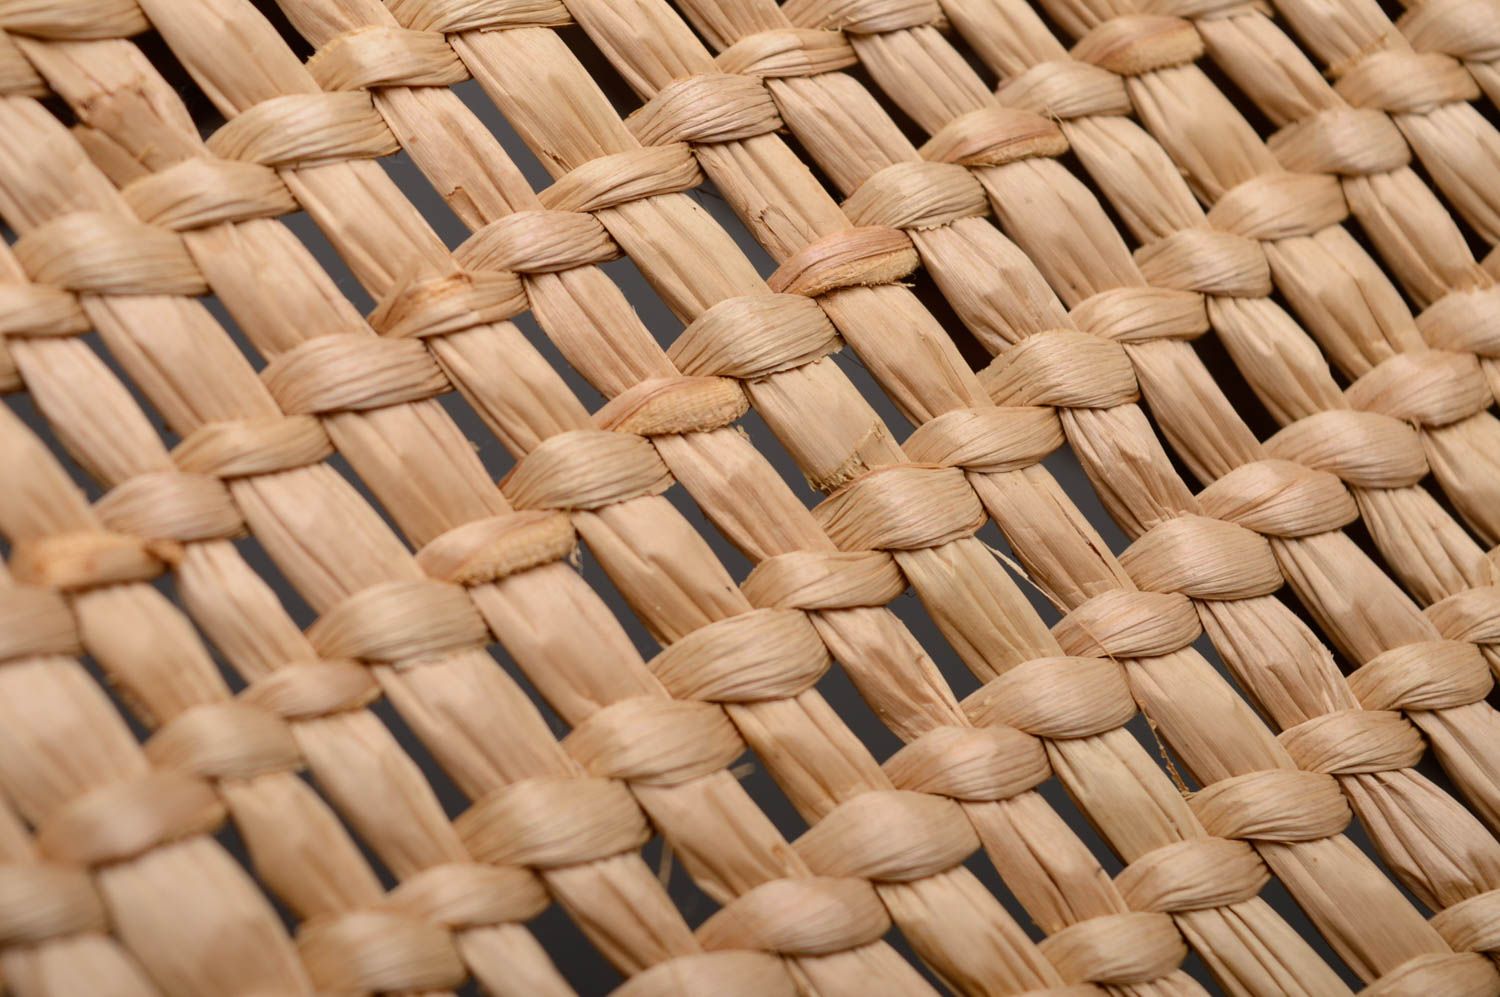 Reedmace woven linen basket photo 3